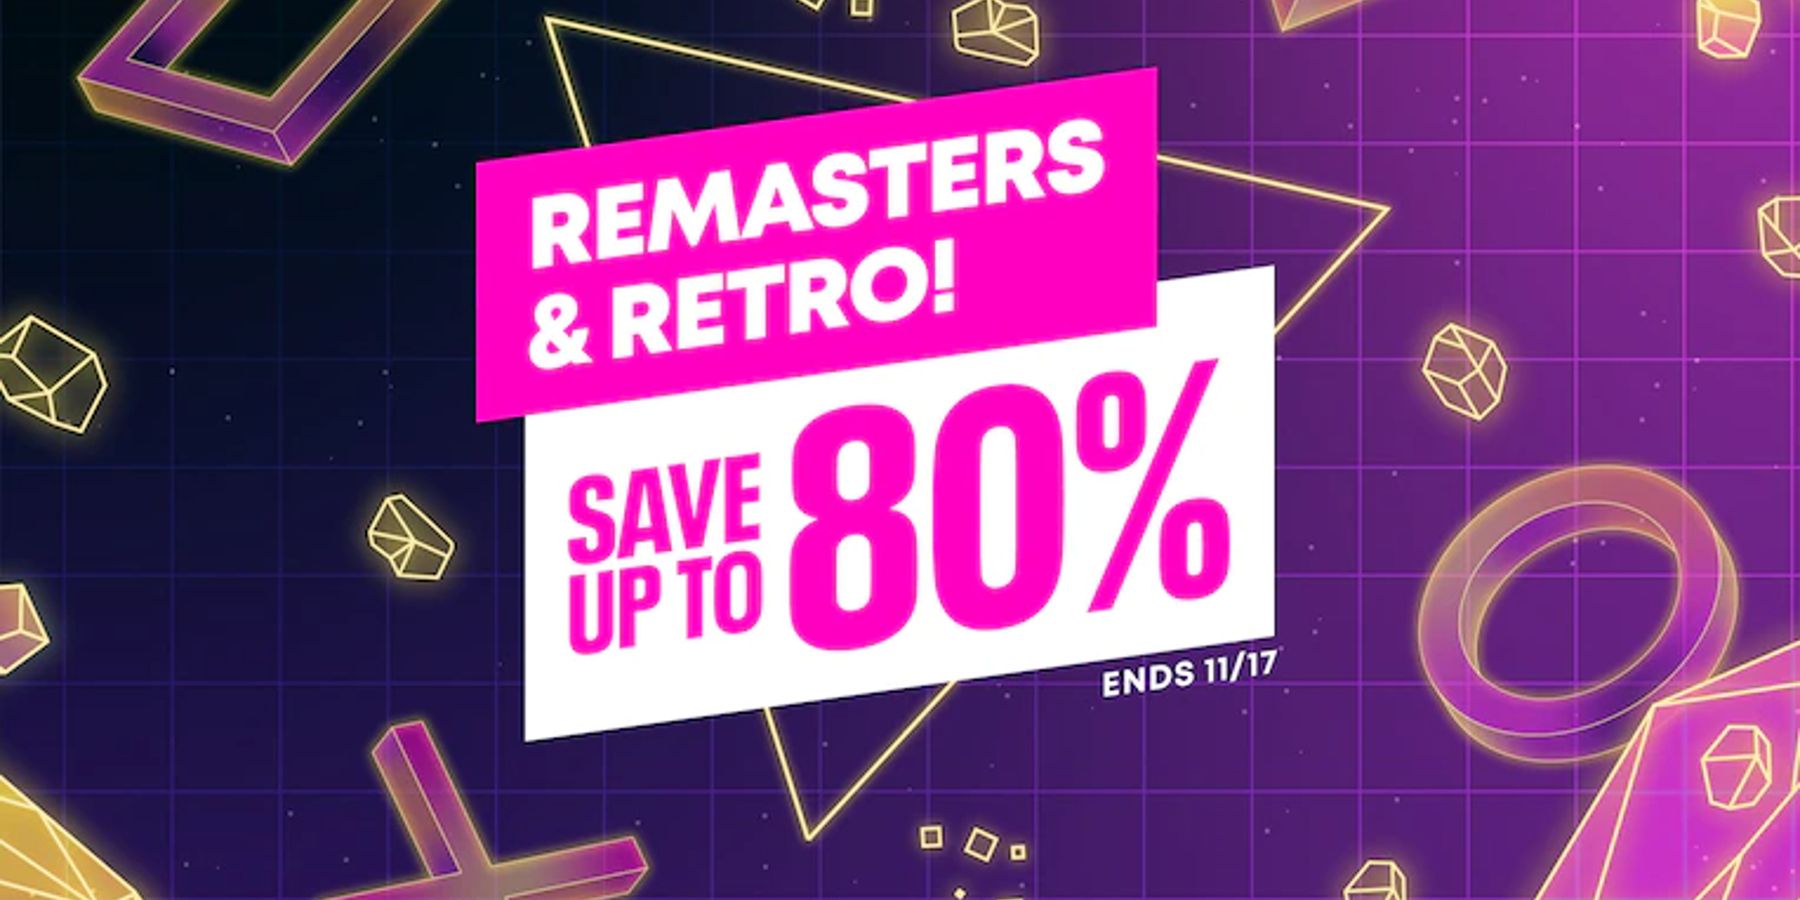 playstation retro remasters logo